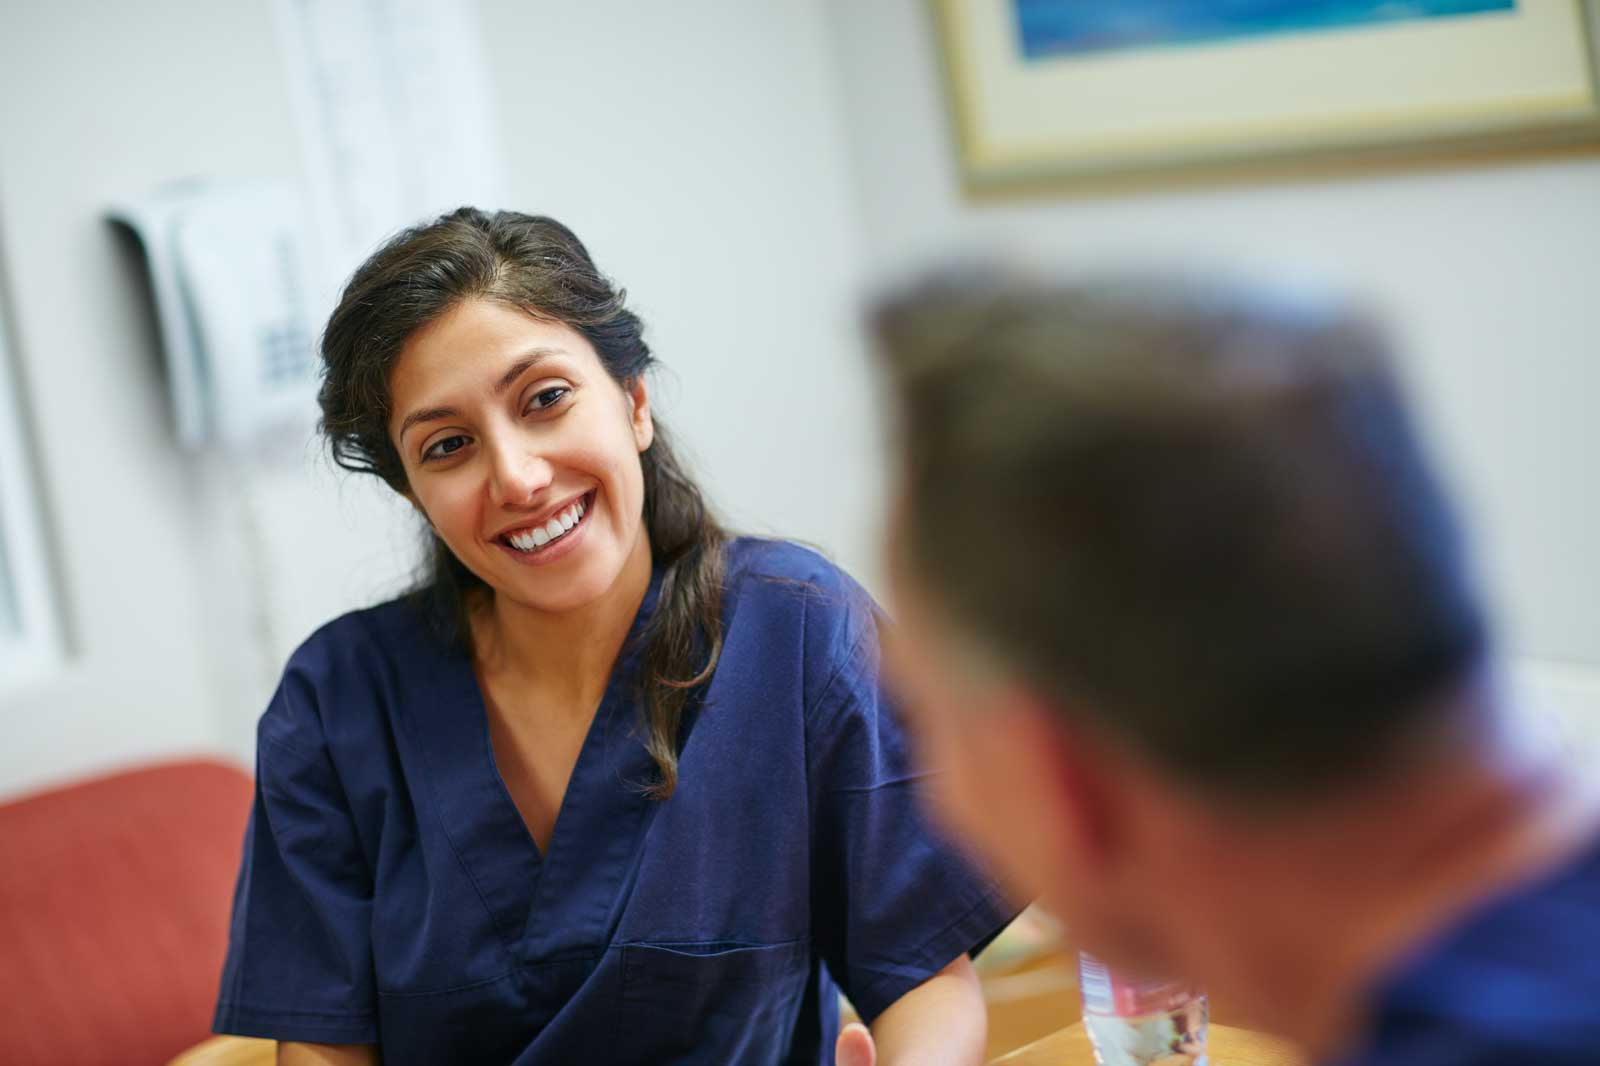 Female health professional smiling, wearing blue scrubs